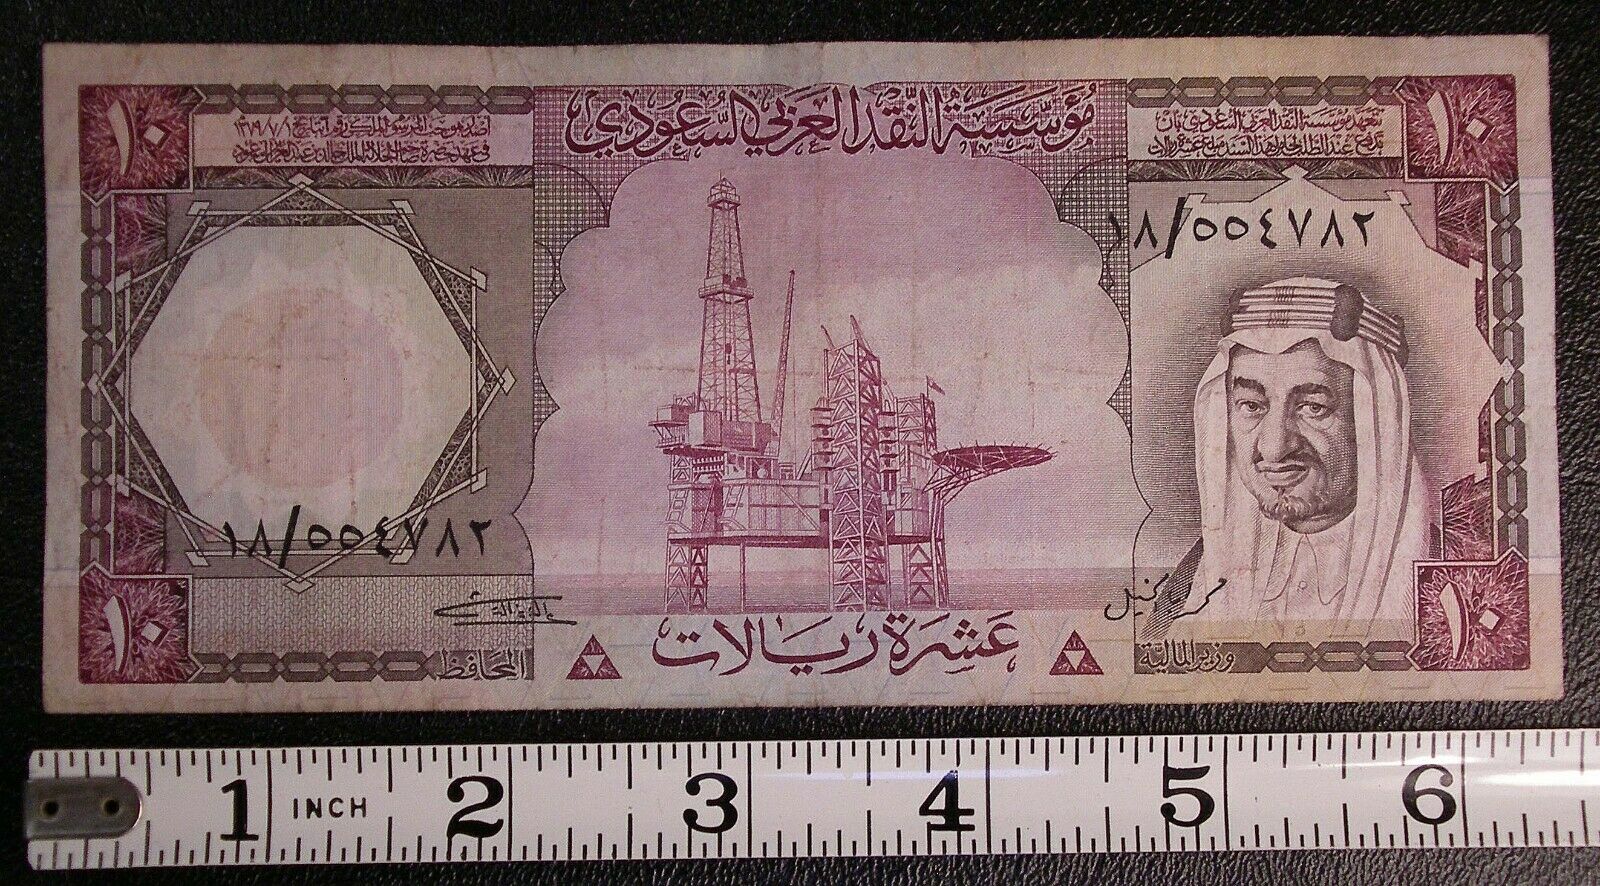 L.AH1379 (1977) Saudi Arabia 10 Riyals King Faisal OIL RIG banknote P-18 #6578